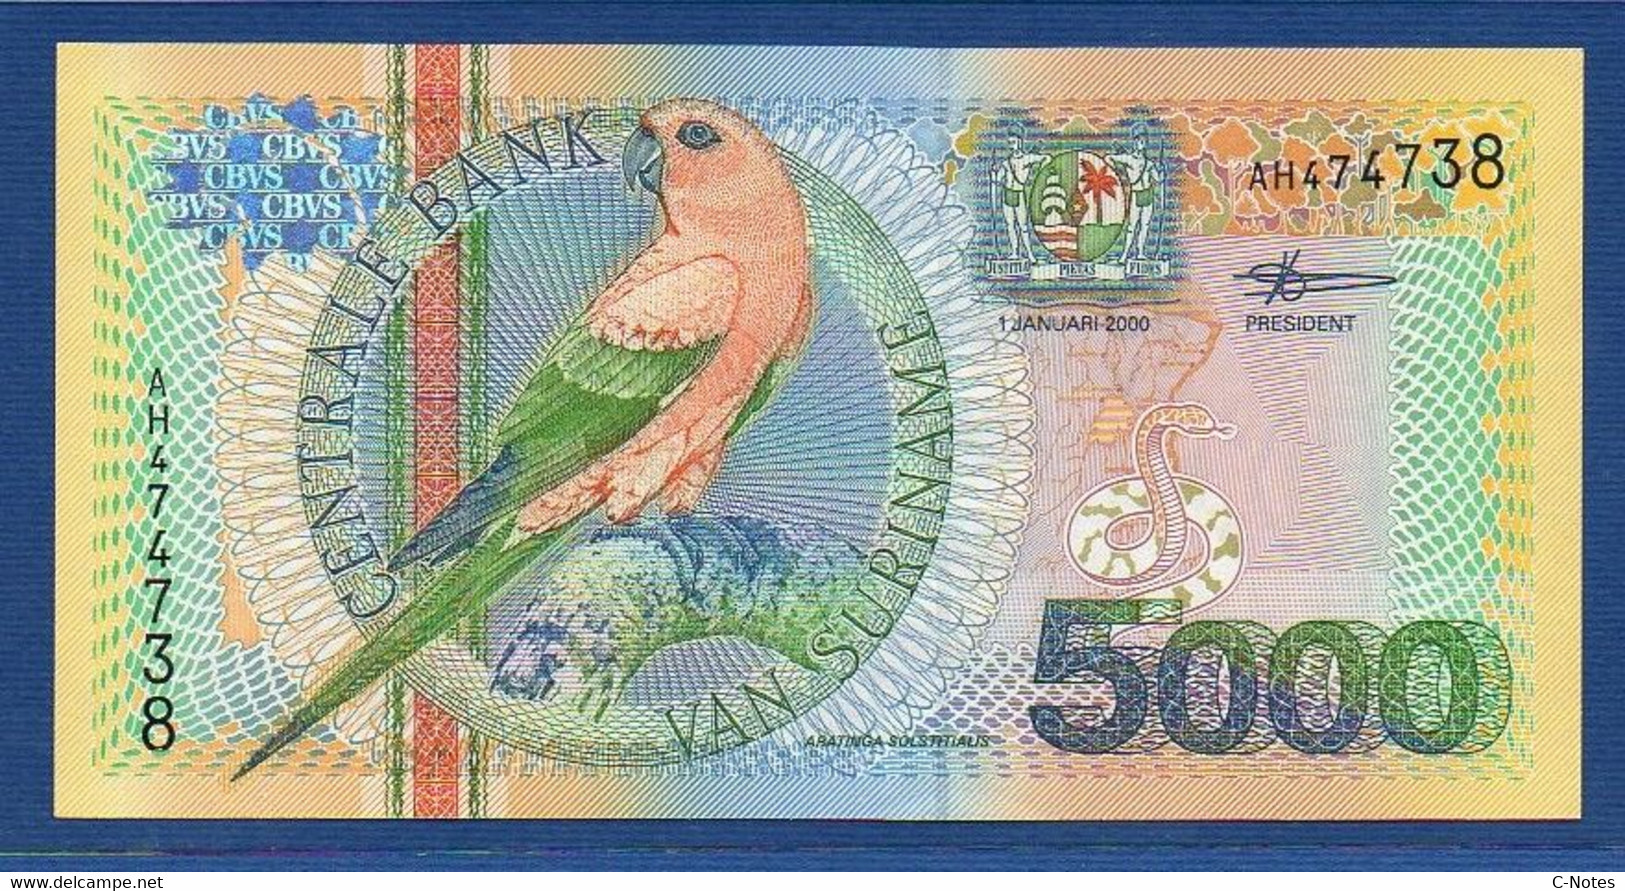 SURINAME - P.152 – 5000 Gulden 2000 UNC, Serie AH474738 - Surinam